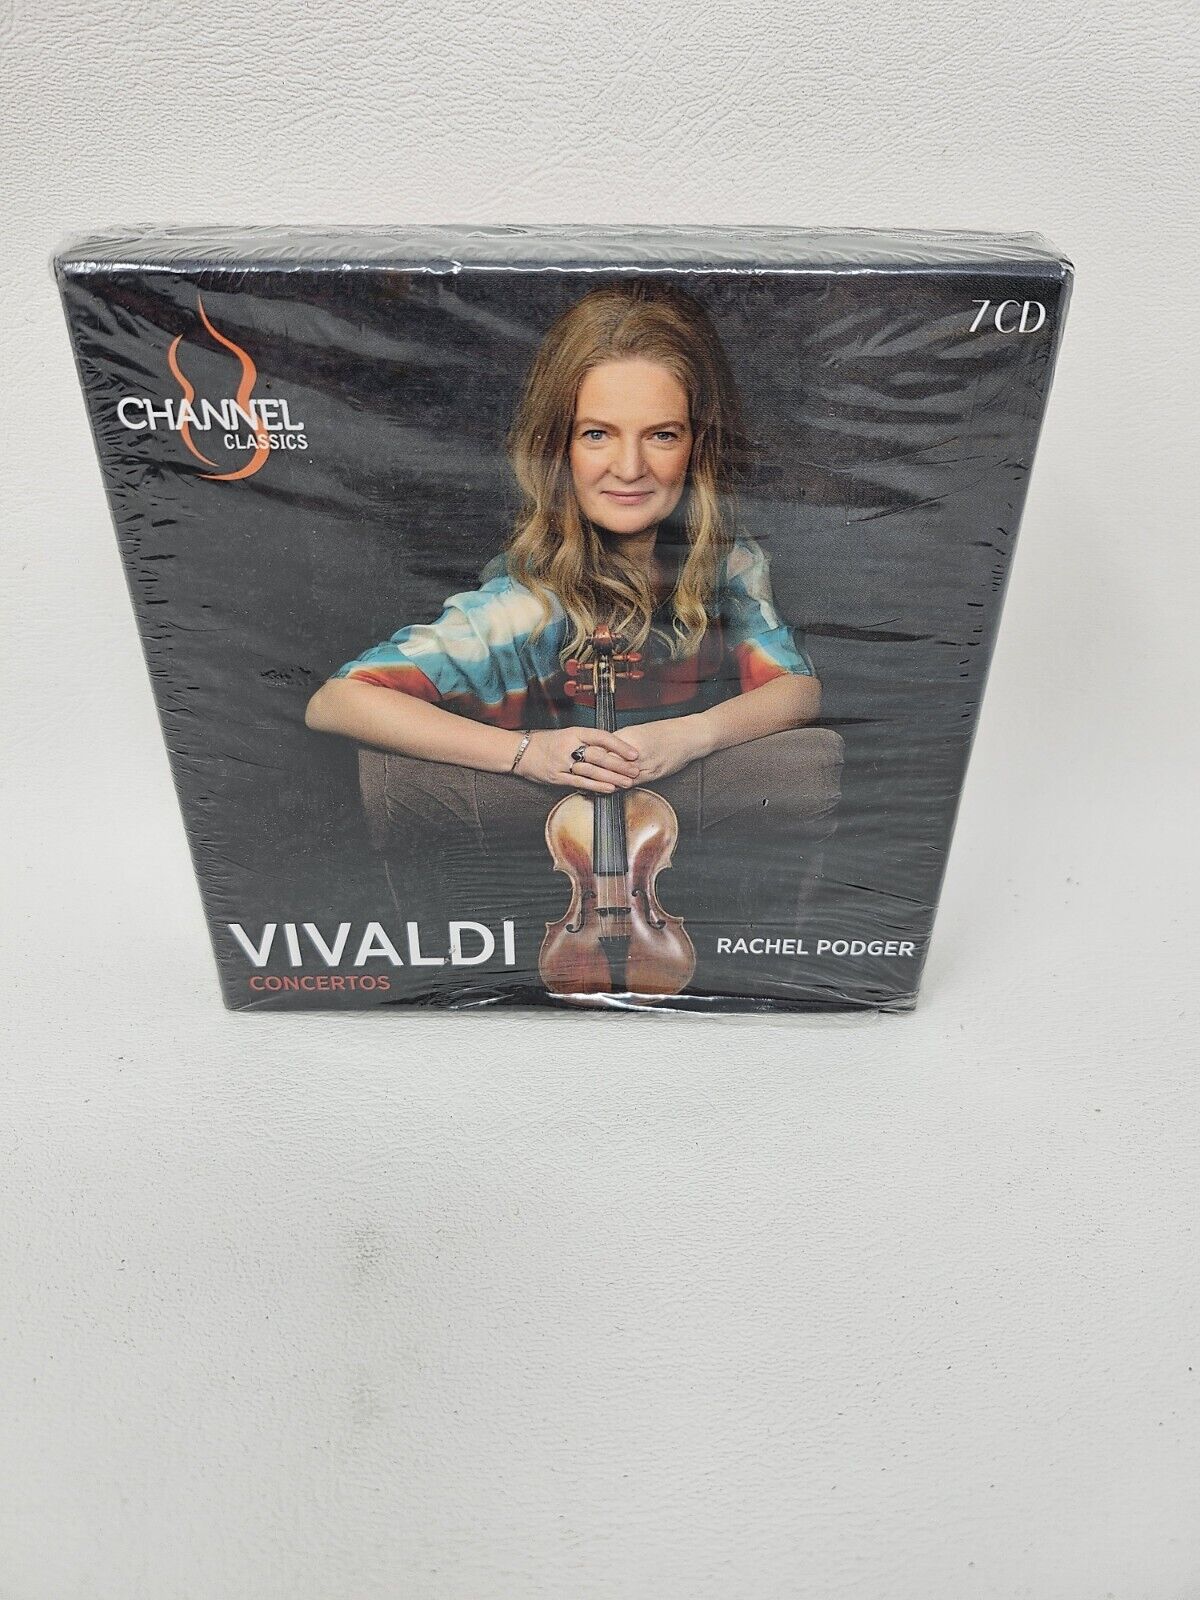 Antonio Vivaldi Vivaldi: Concertos 7 Disc's (CD) Box Set *New/Seal Torn*